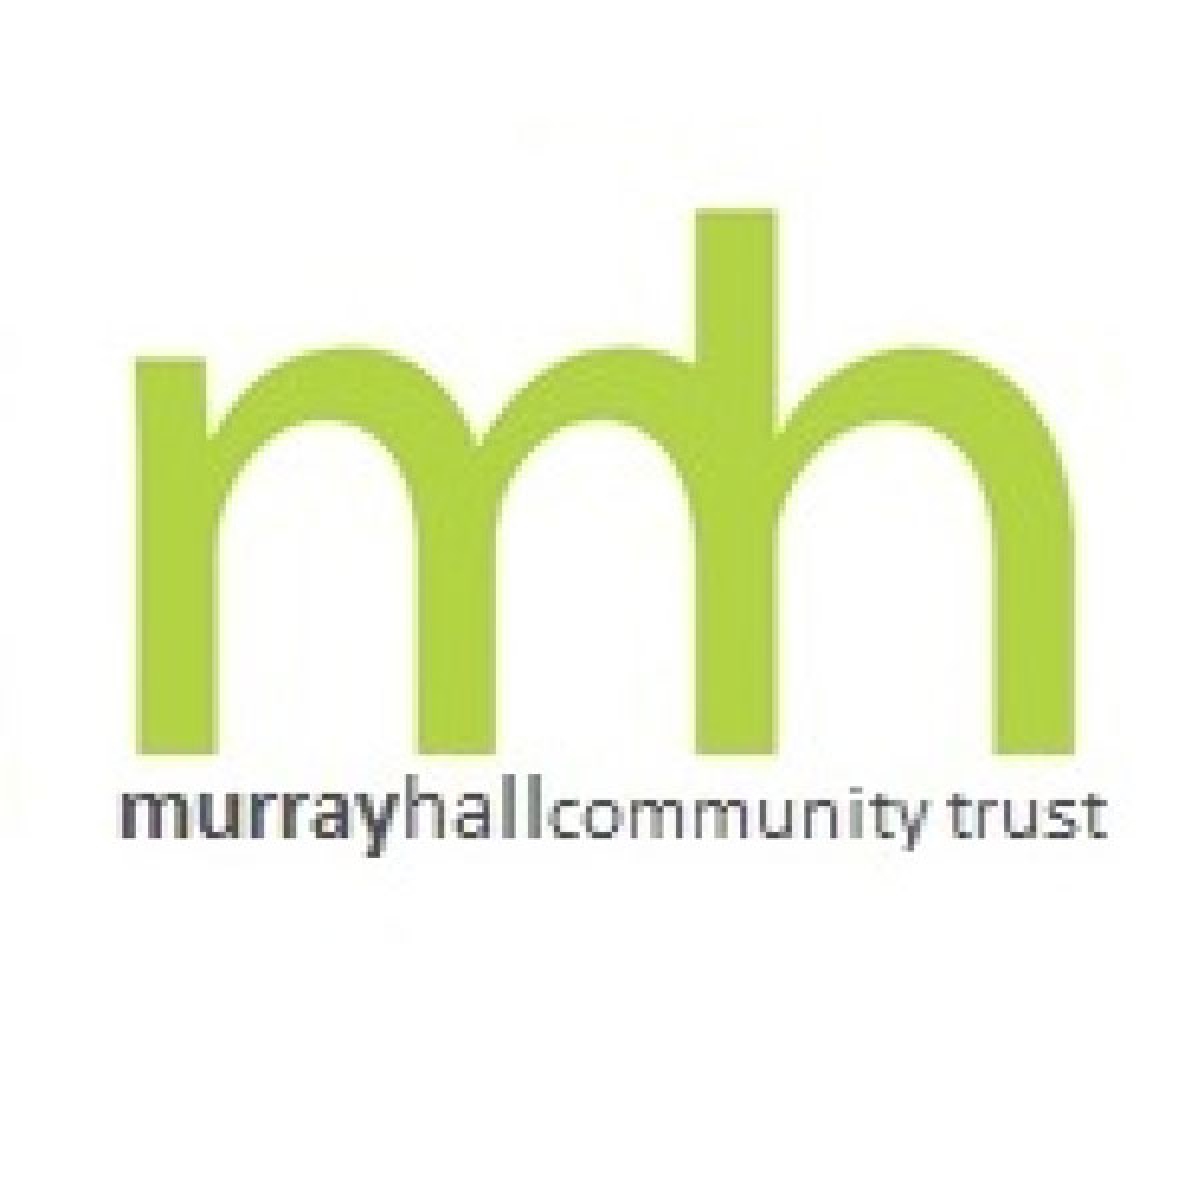 Murray Hall Community Trust eCards